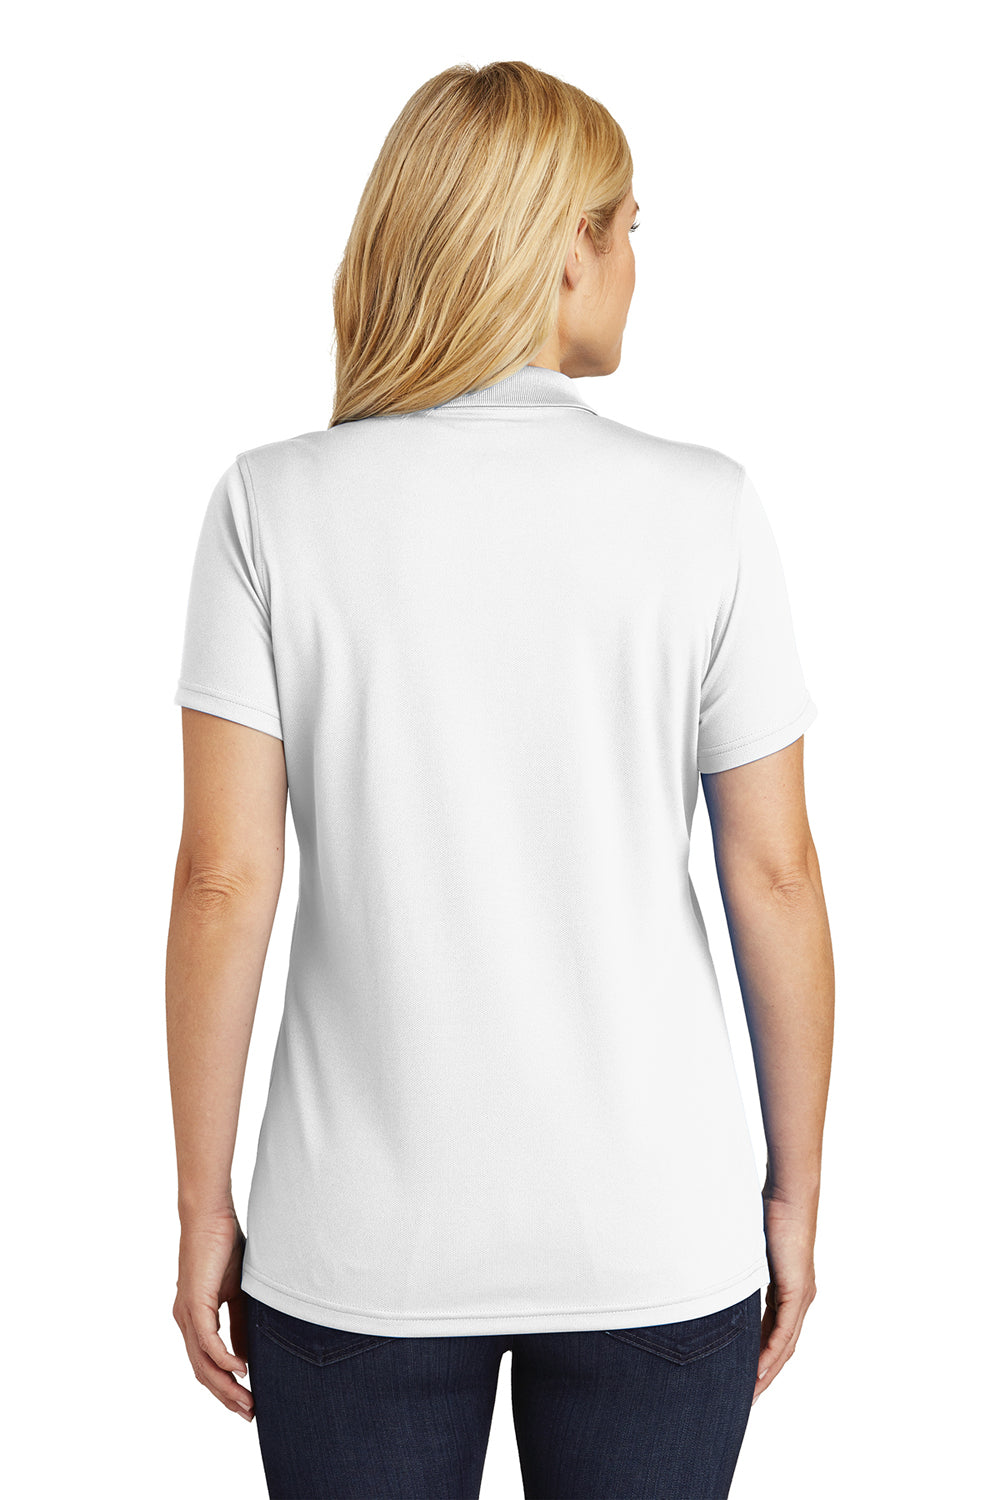 Port Authority LK110 Womens Dry Zone Moisture Wicking Short Sleeve Polo Shirt White Back